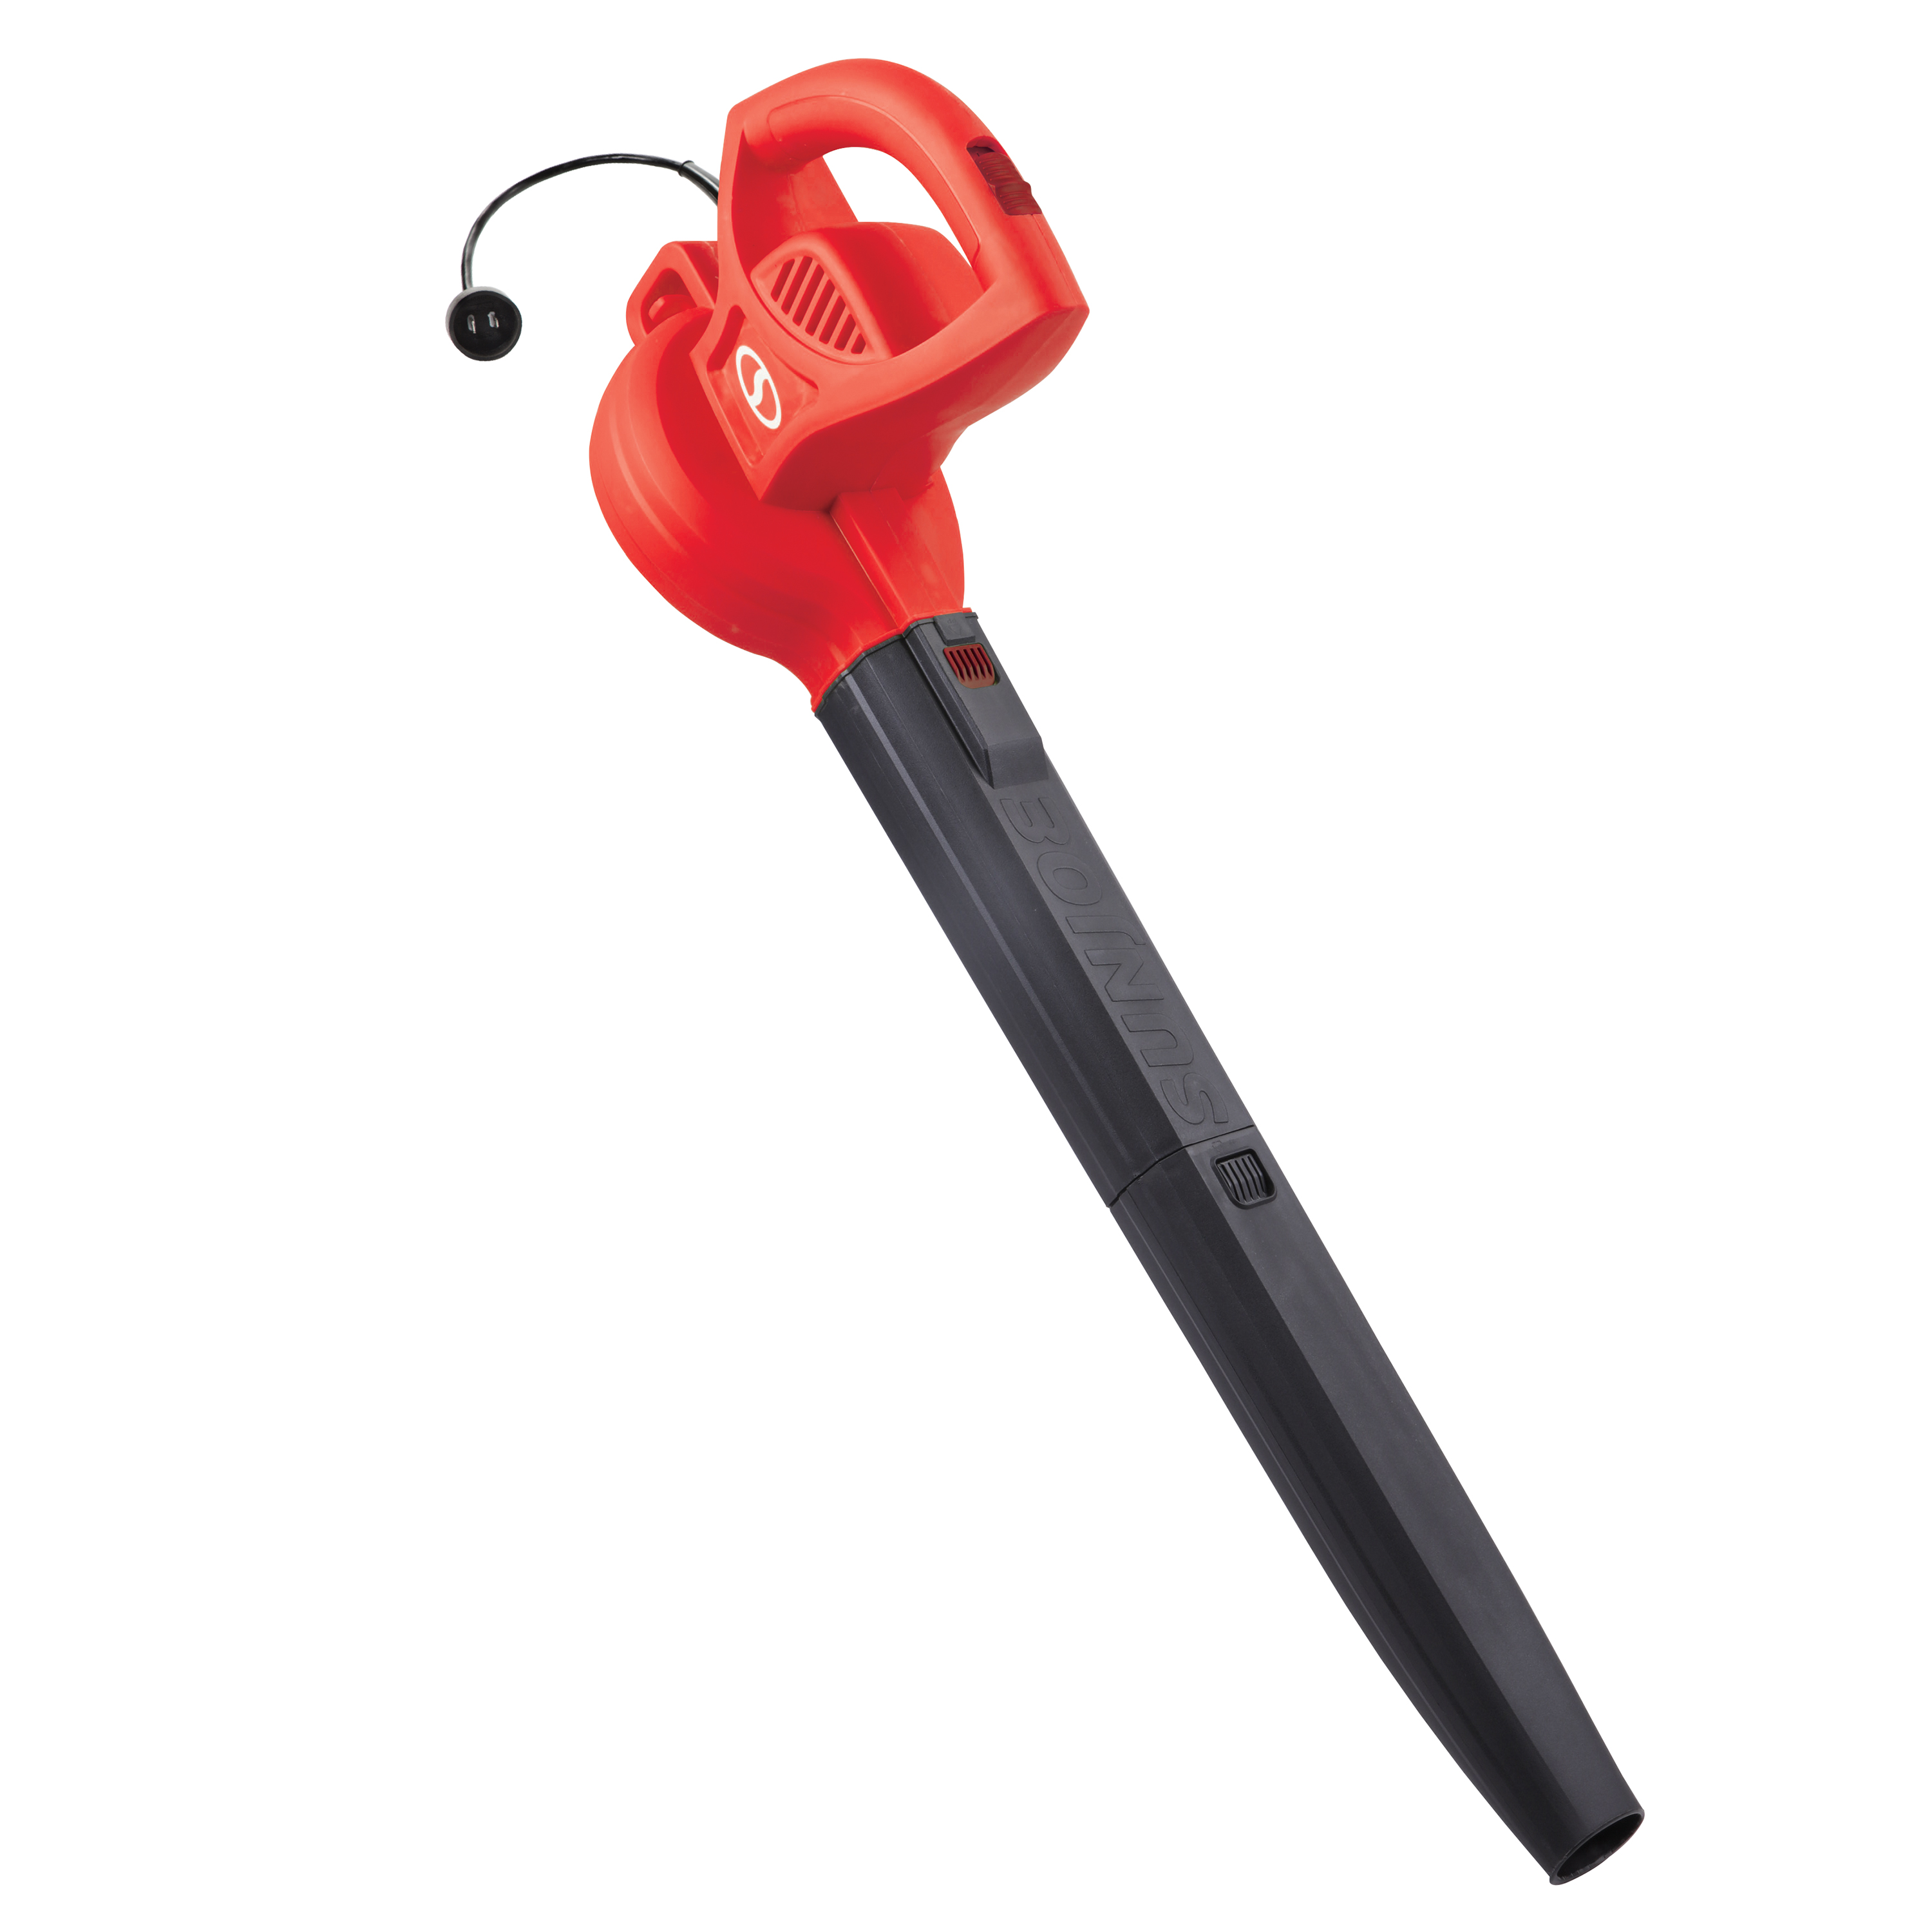 Sun Joe All-Purpose Electric Leaf Blower, 6-Amp, 155-mph, 260-CFM - Red - image 3 of 9